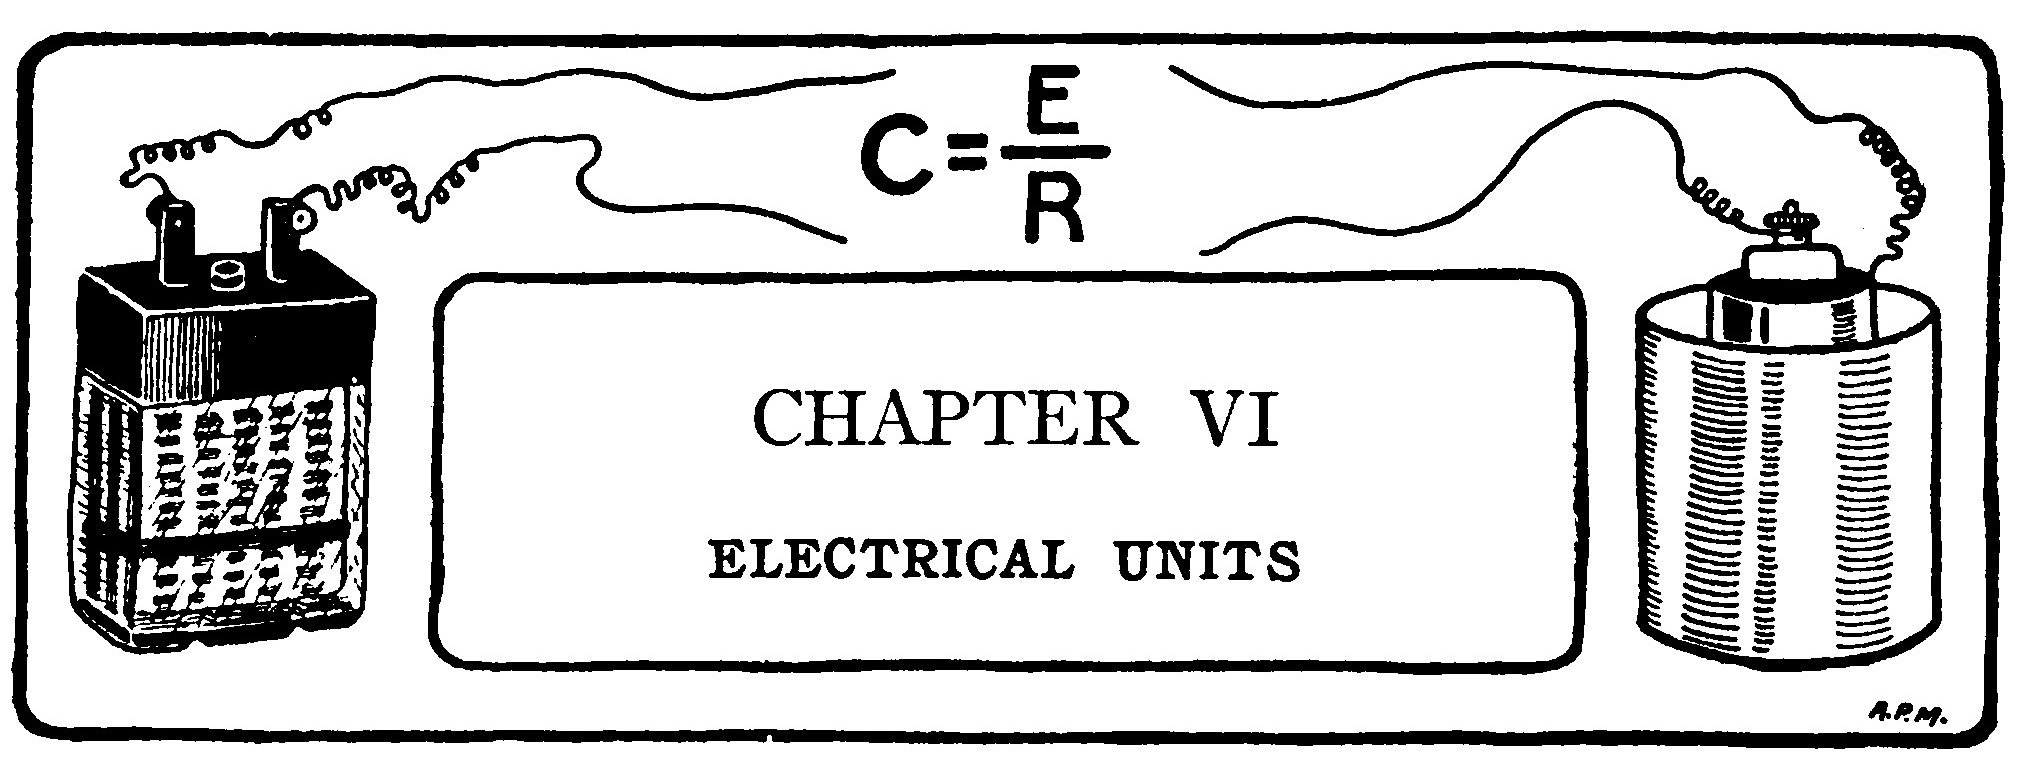 ELECTRICAL UNITS